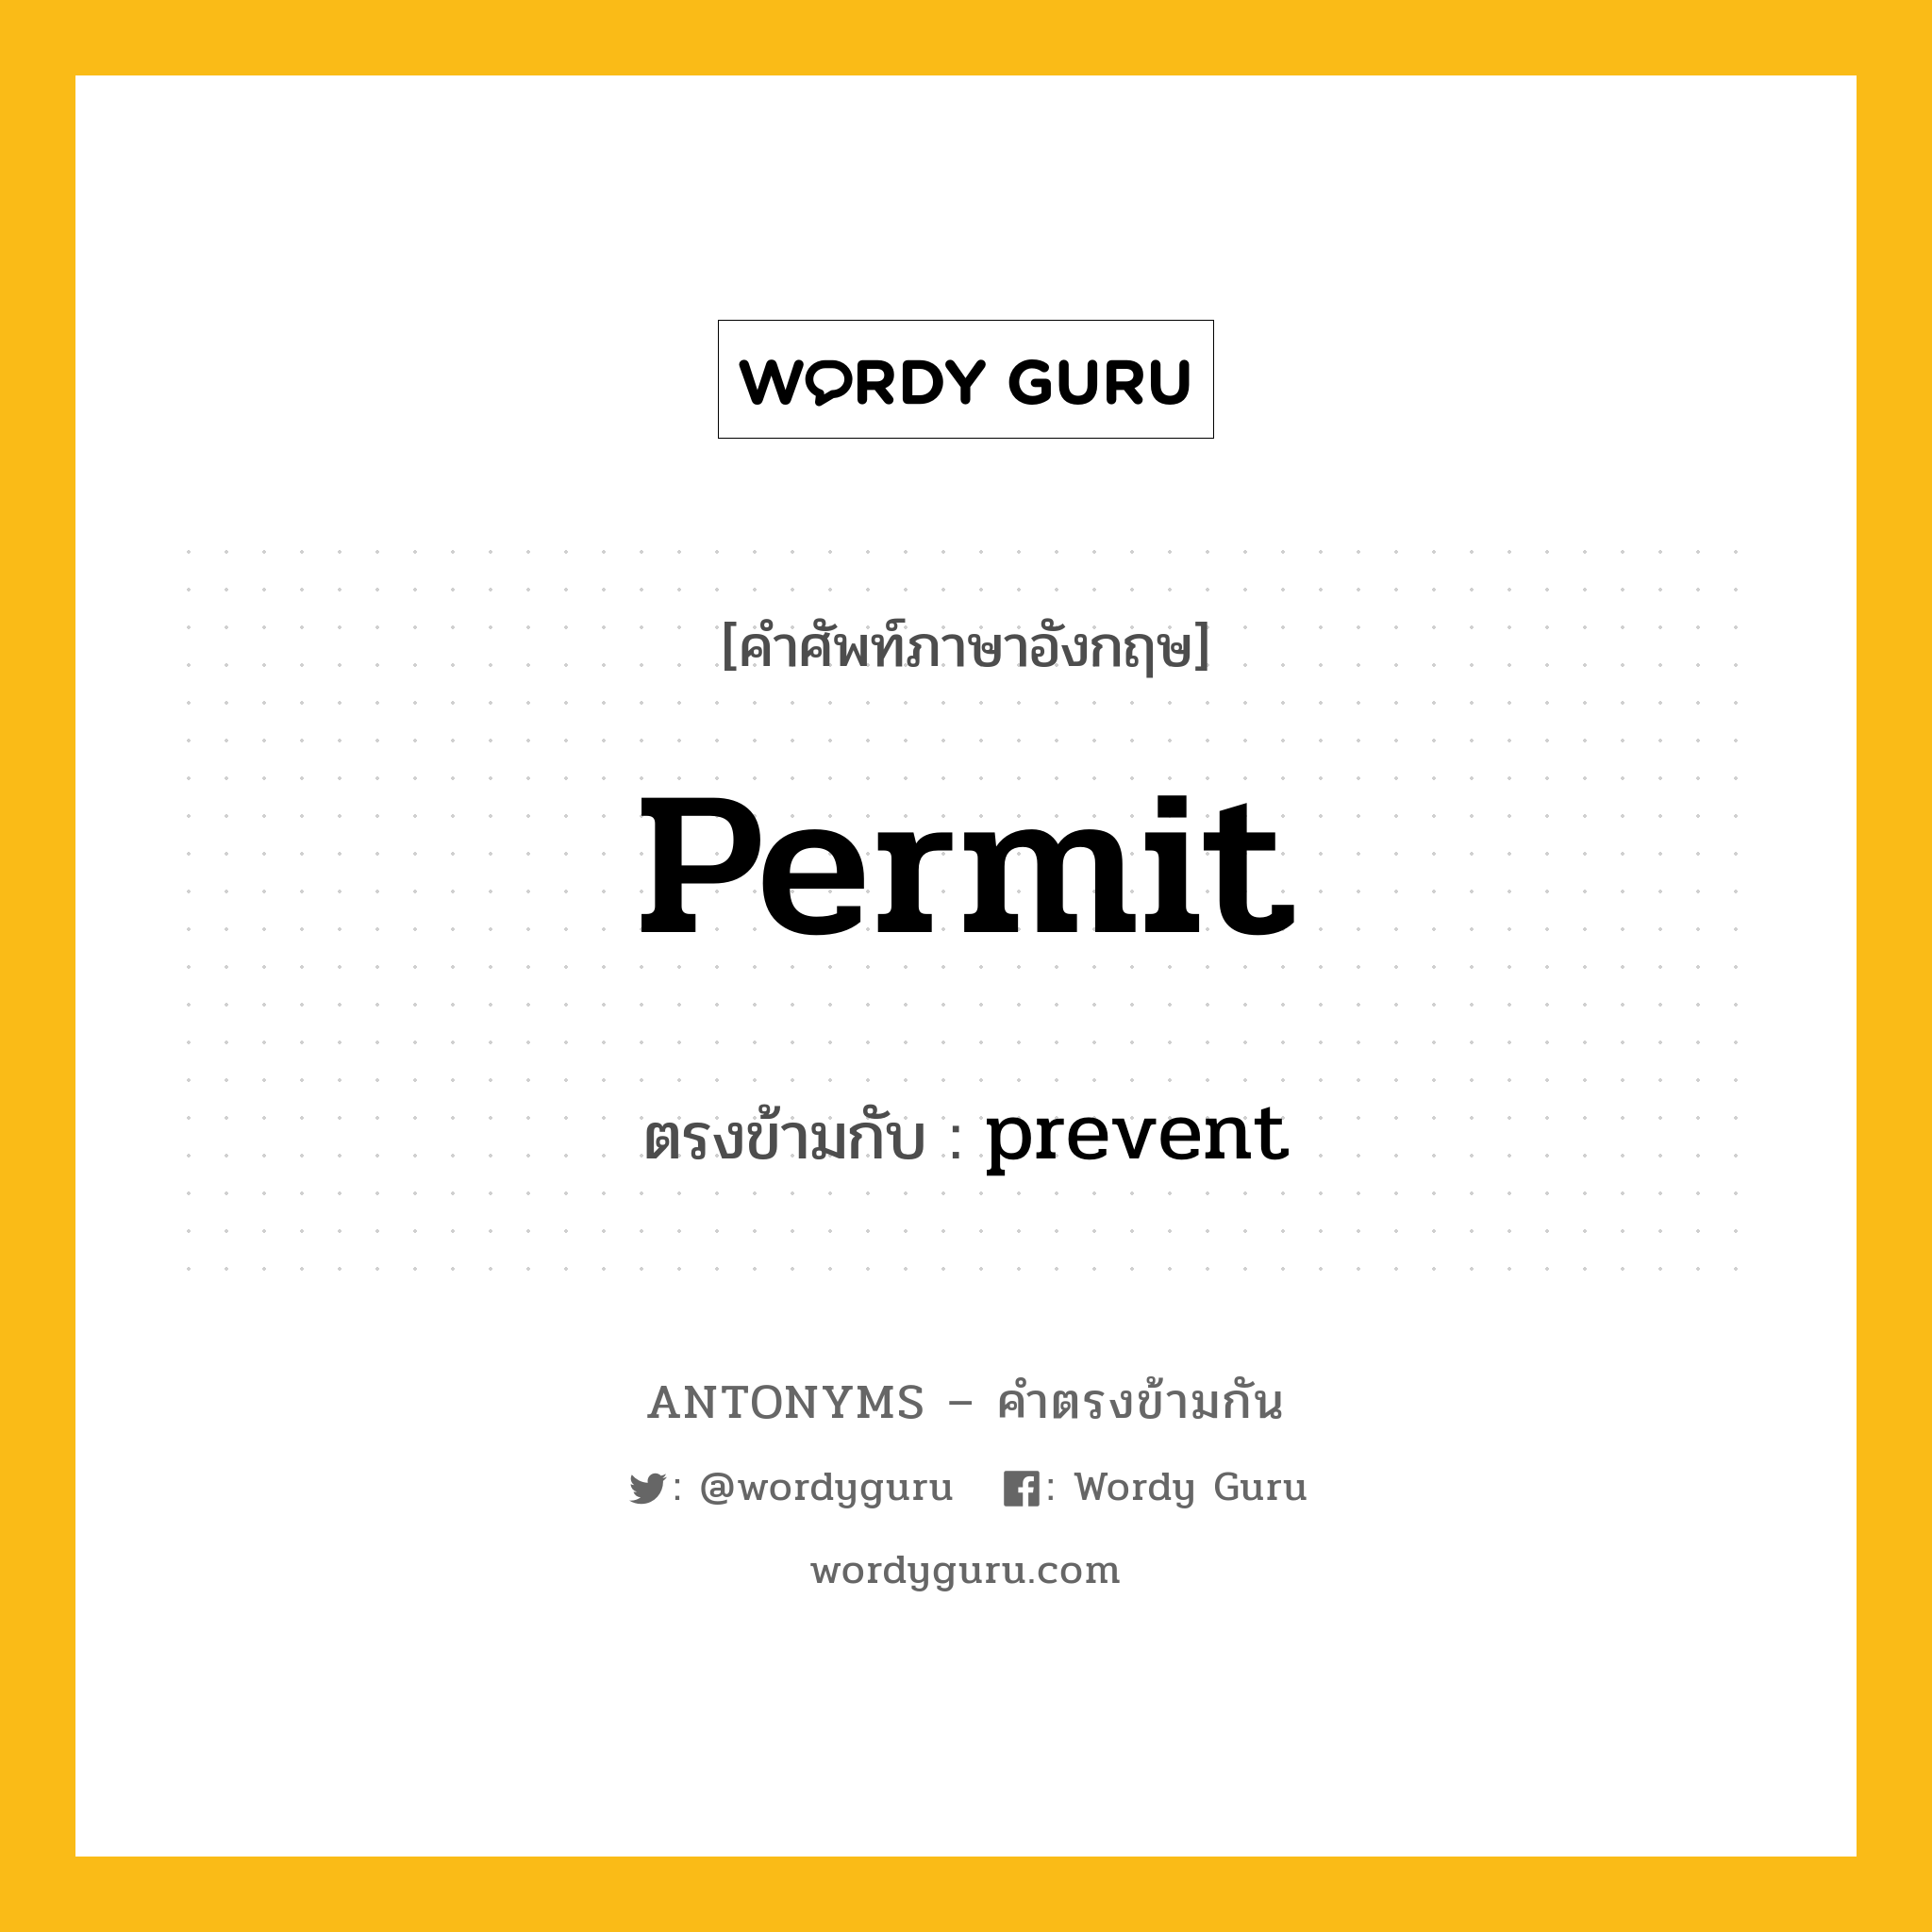 permit เป็นคำตรงข้ามกับคำไหนบ้าง?, คำศัพท์ภาษาอังกฤษ permit ตรงข้ามกับ prevent หมวด prevent